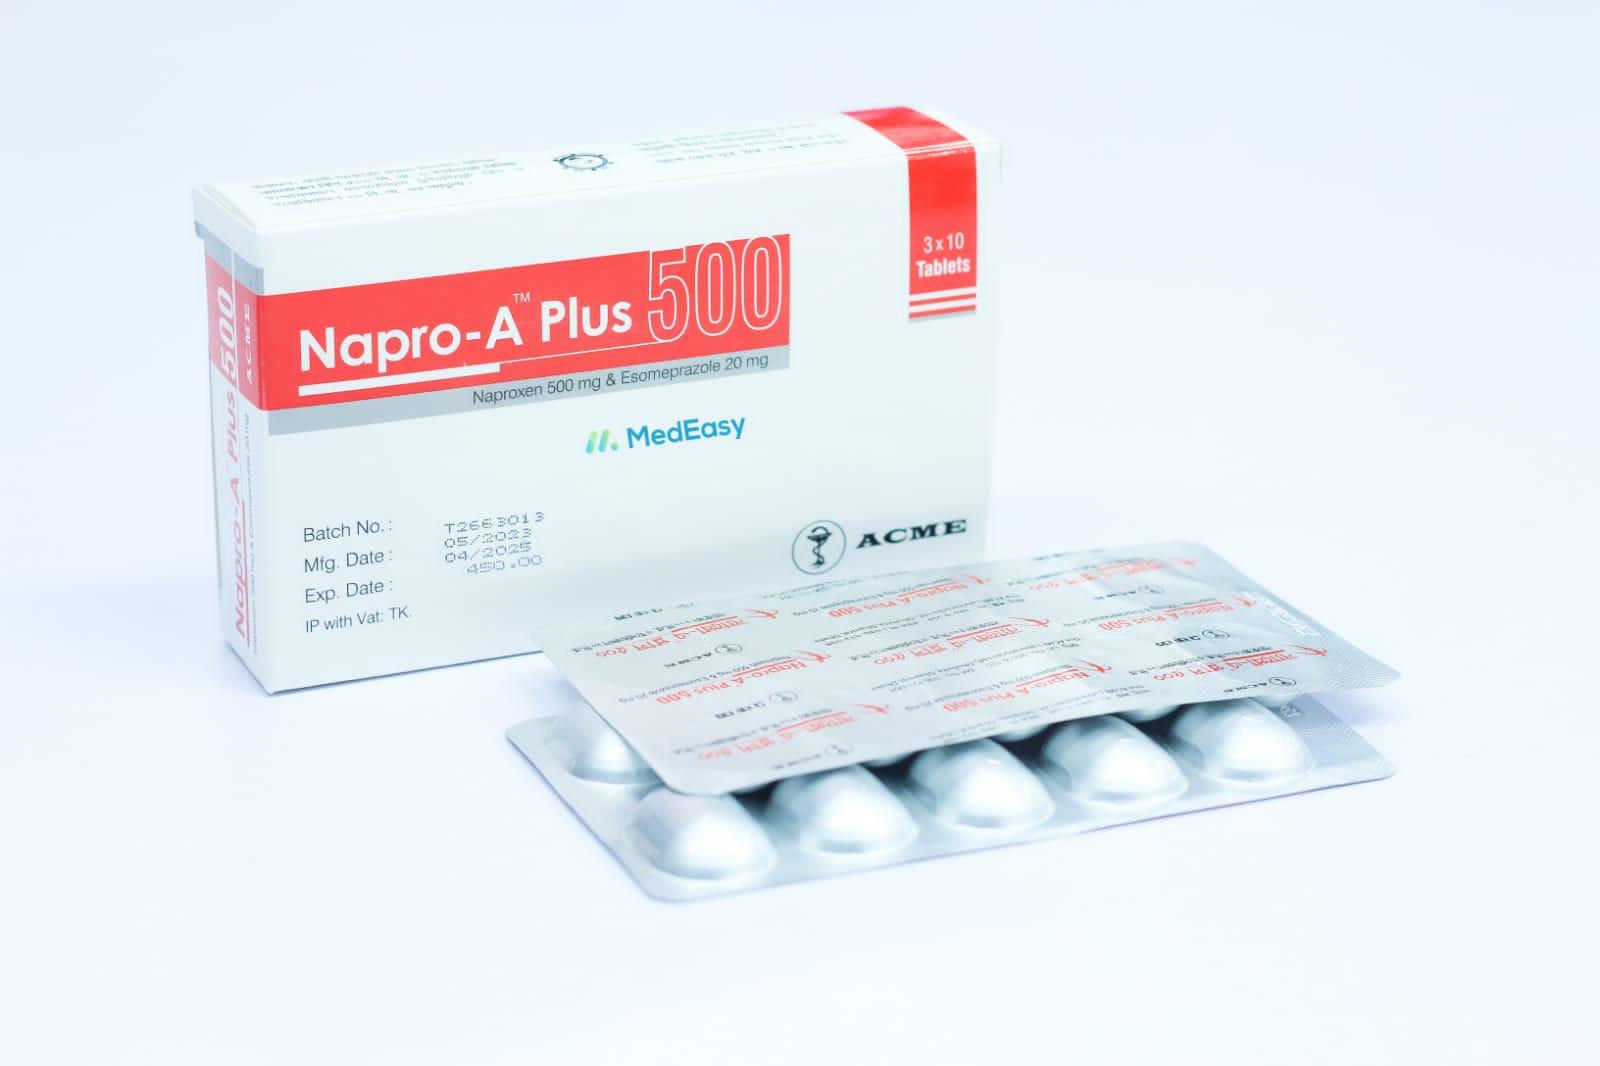 Napro-A Plus